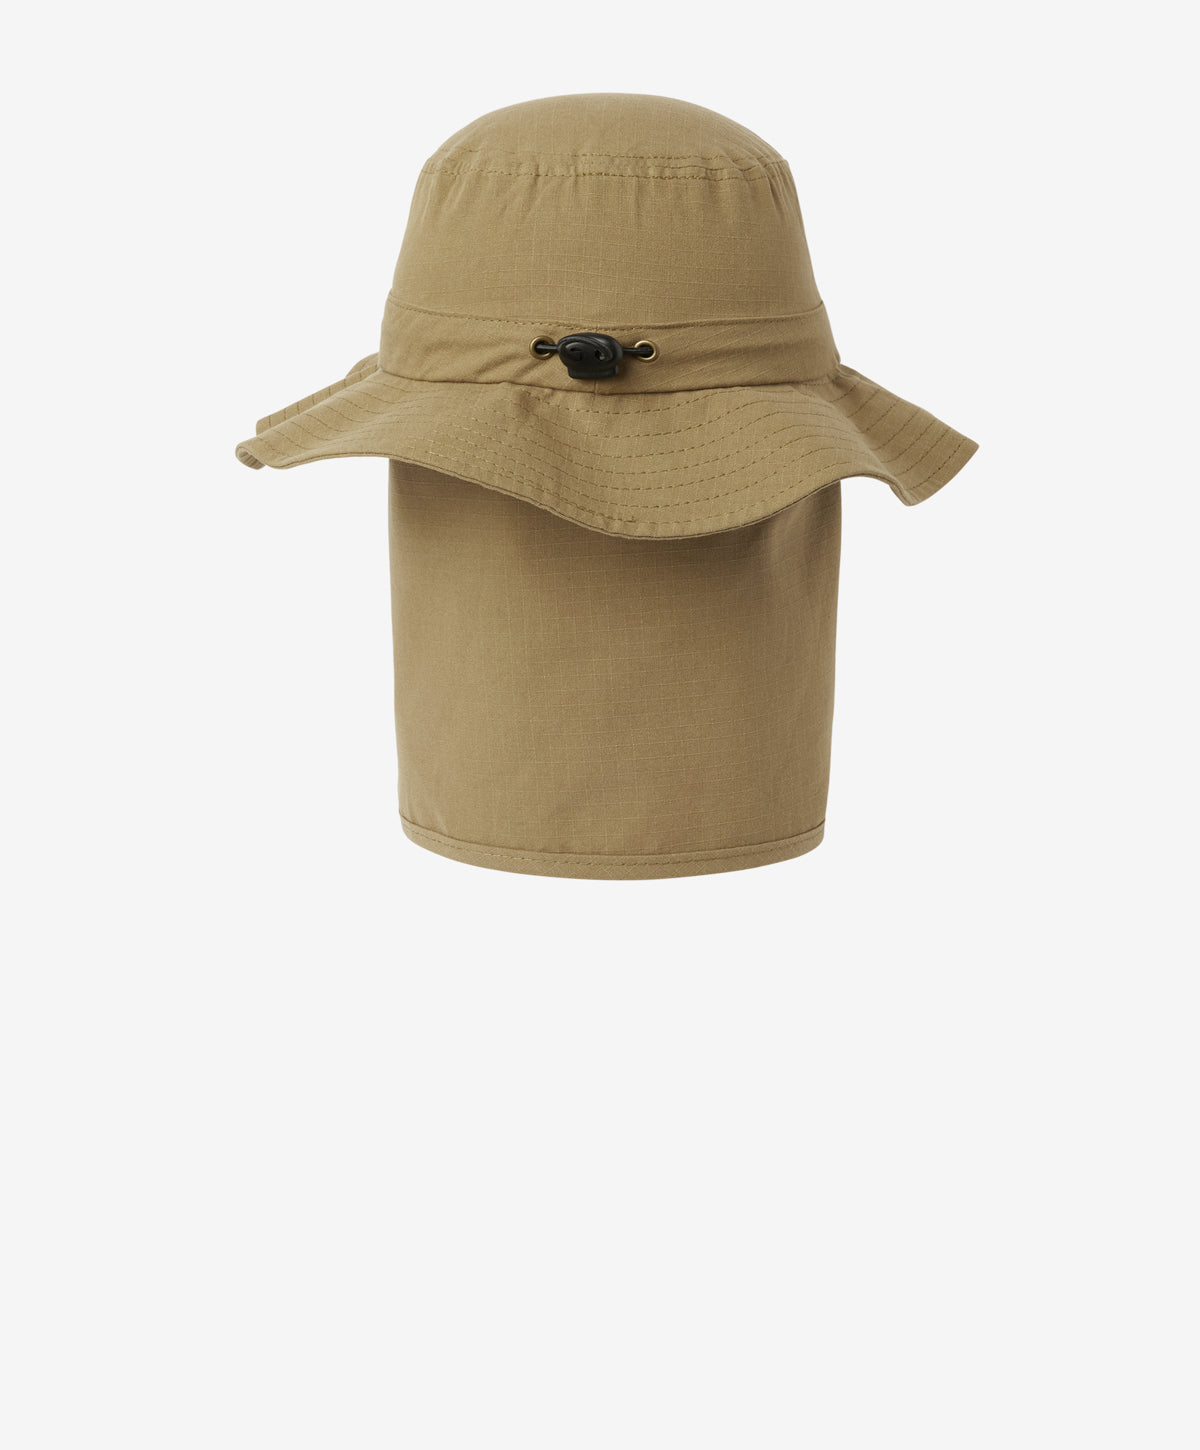 Funky - Yeti Outdoor Hat – HUHET